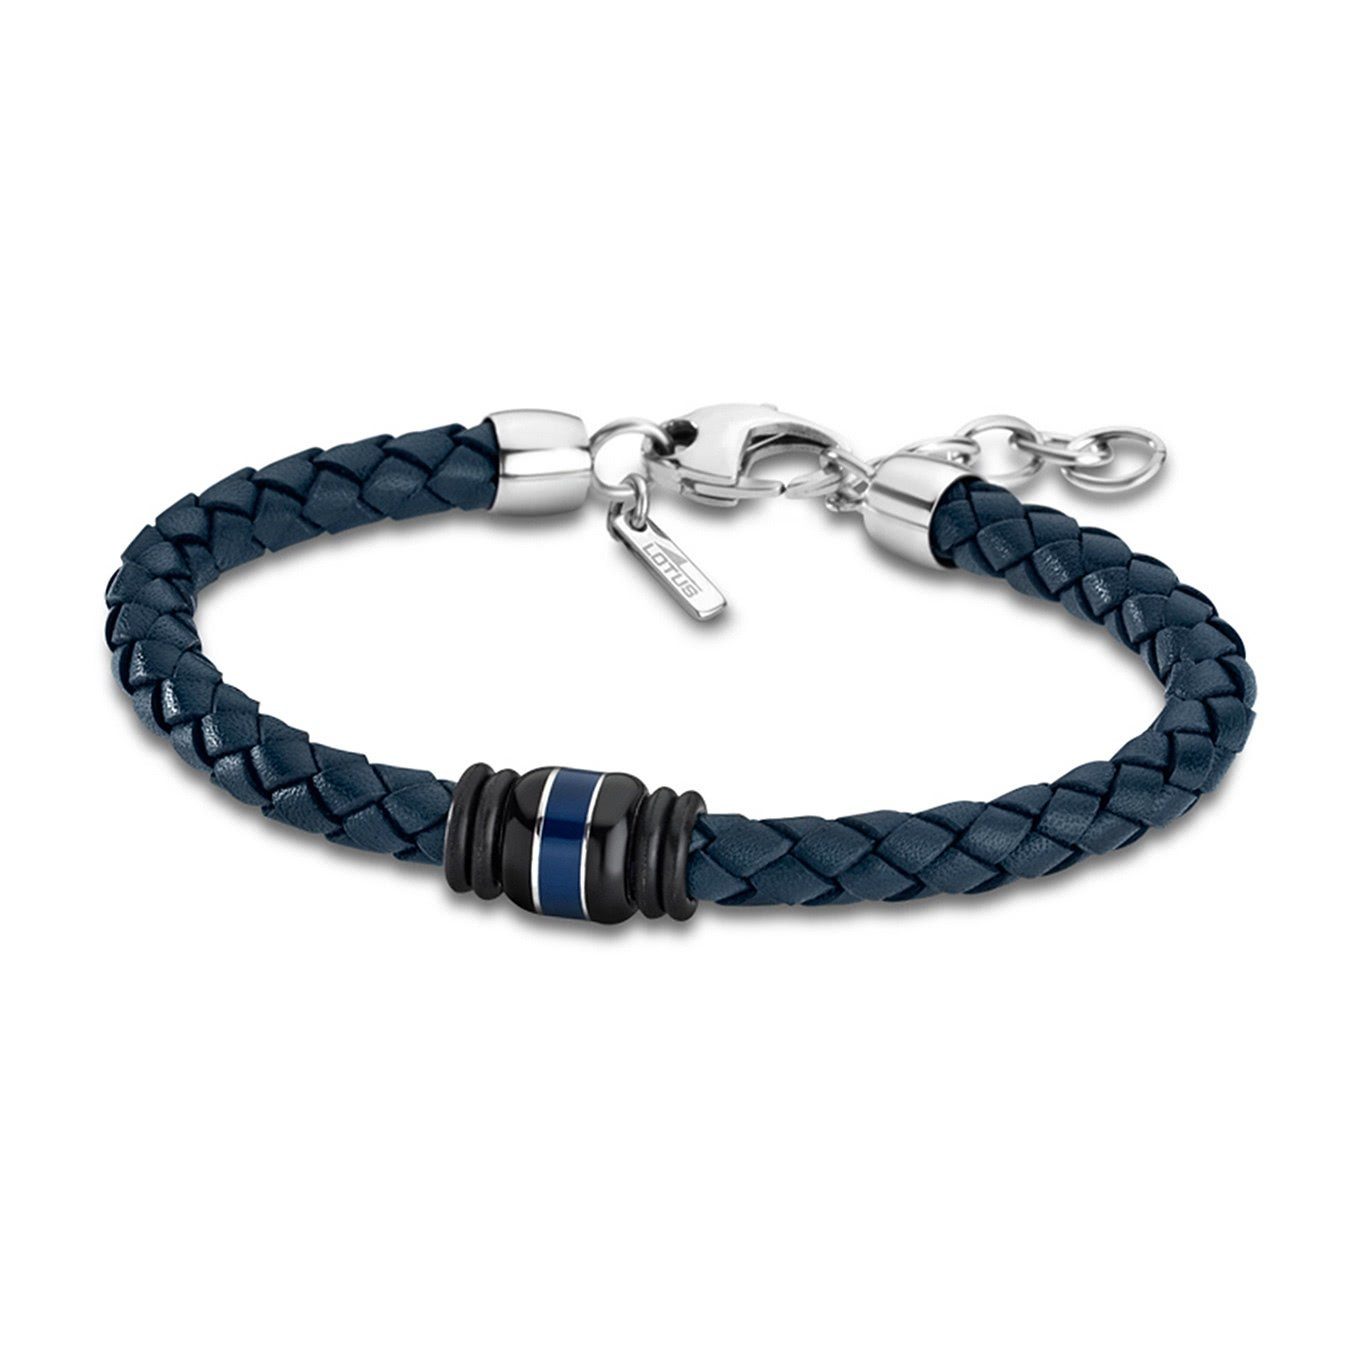 Lotus Style Armband Lotus Herren (Armband), aus Urban (Stainless Edelstahl Steel), Style für Armband blau Echtleder